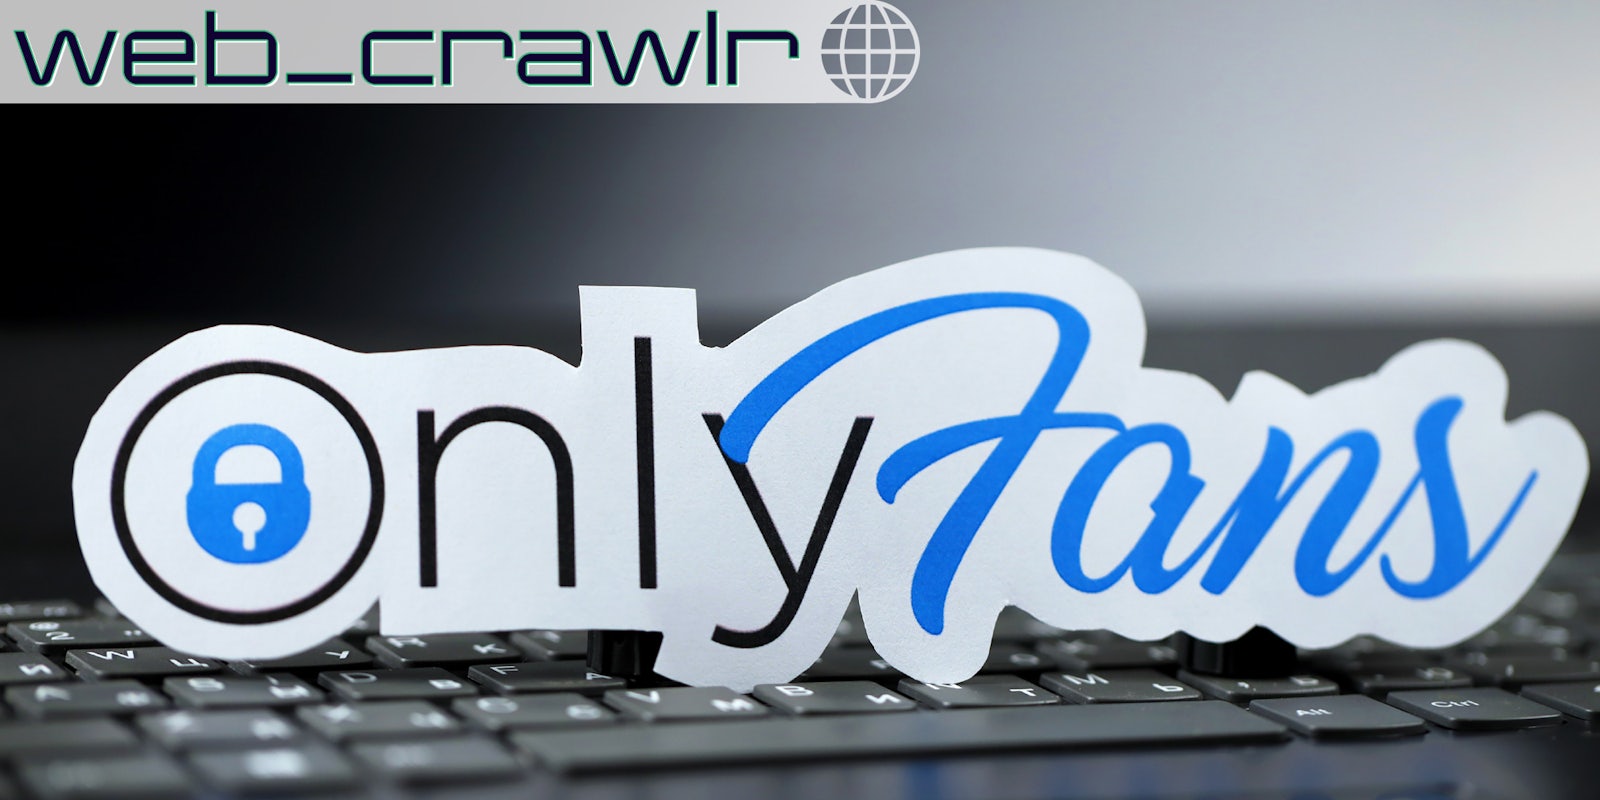 Onlyfans paper logo on black laptop keyboard. The Daily Dot newsletter web_crawlr logo is in the top left corner.